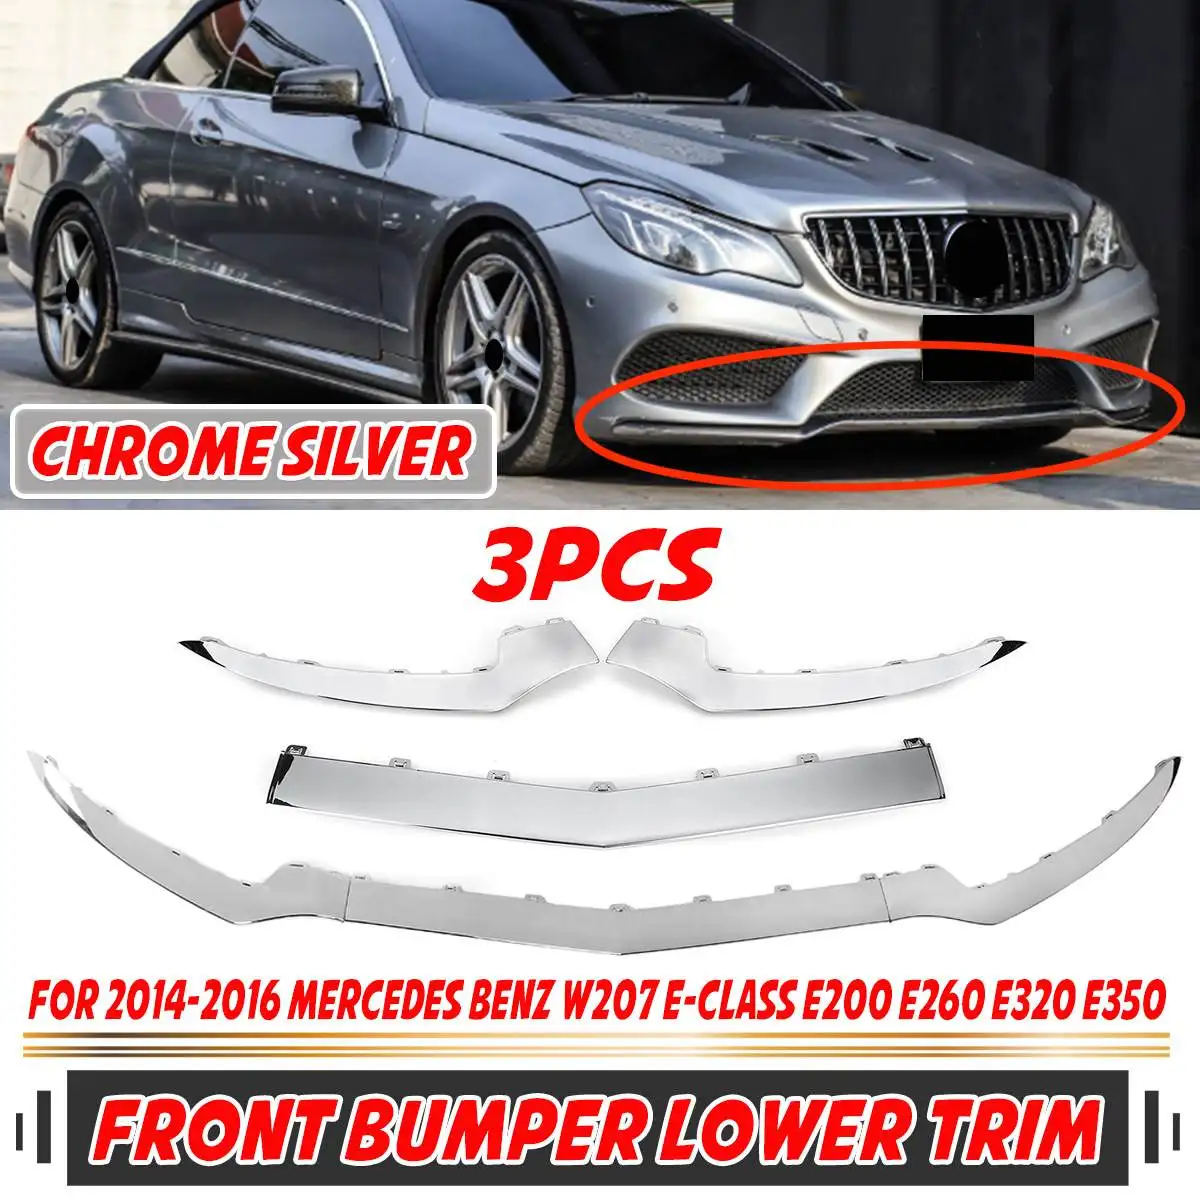 3Pcs Chrome Silver รถกันชนด้านหน้าลิปชุด Body สปอยเลอร์ Diffuser สำหรับ Mercedes Benz W207 A207 C207 E320 e350 2014-2016